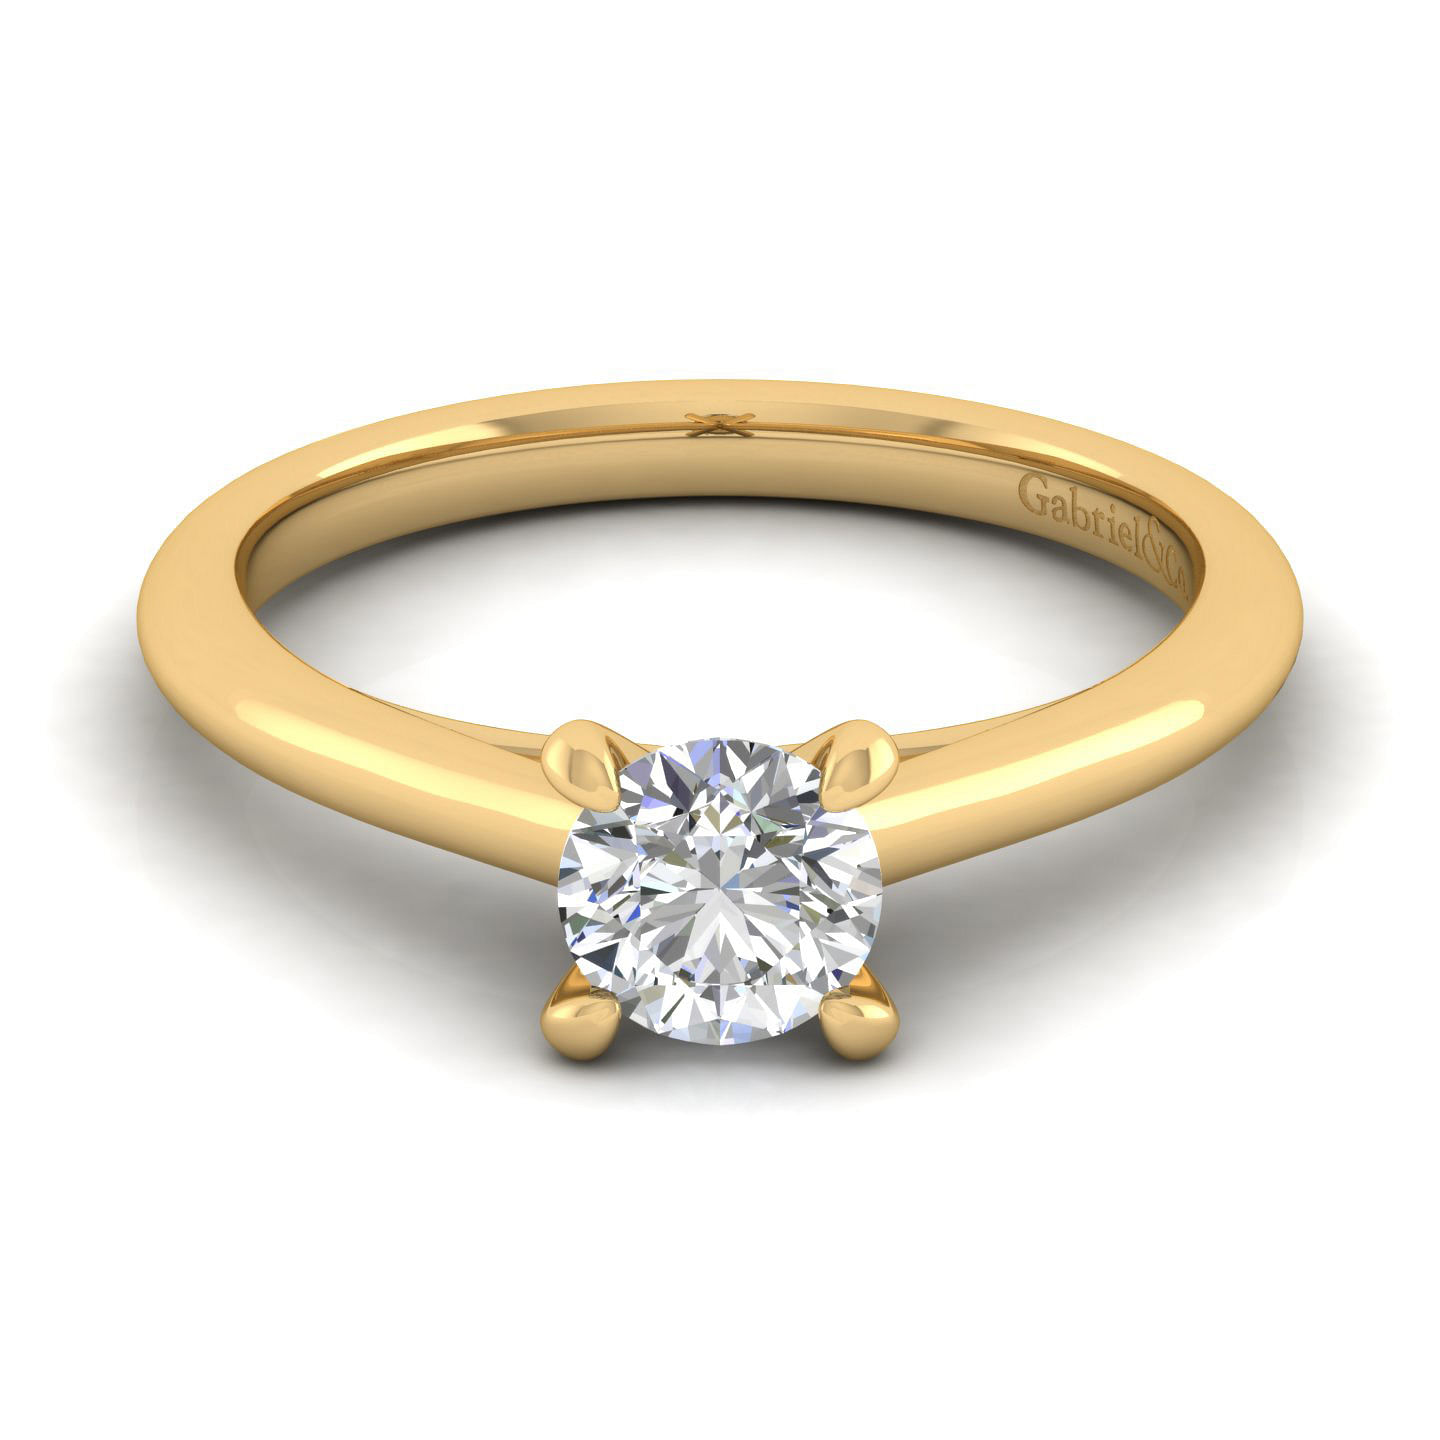 Valerie---14K-Yellow-Gold-Round-Diamond-Engagement-Ring1